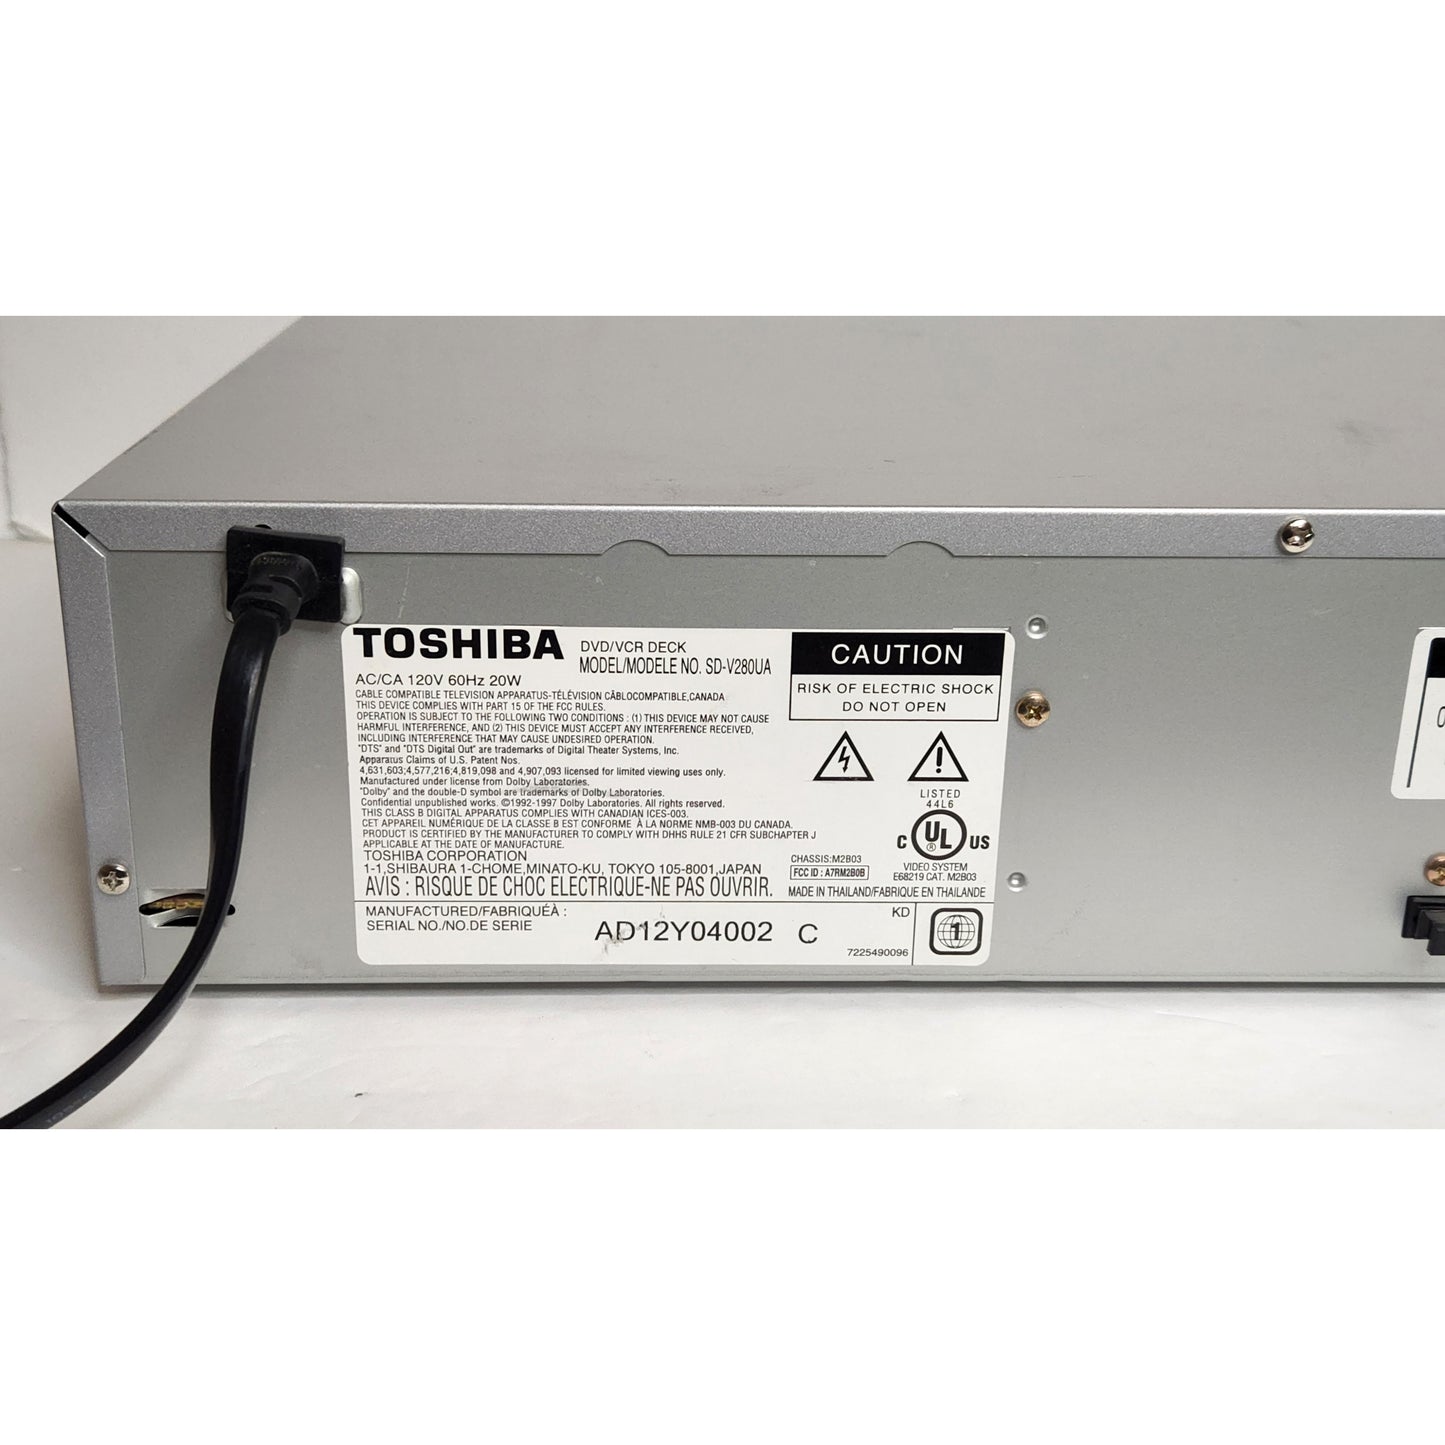 Toshiba SD-V280UA VCR/DVD Player Combo - Label